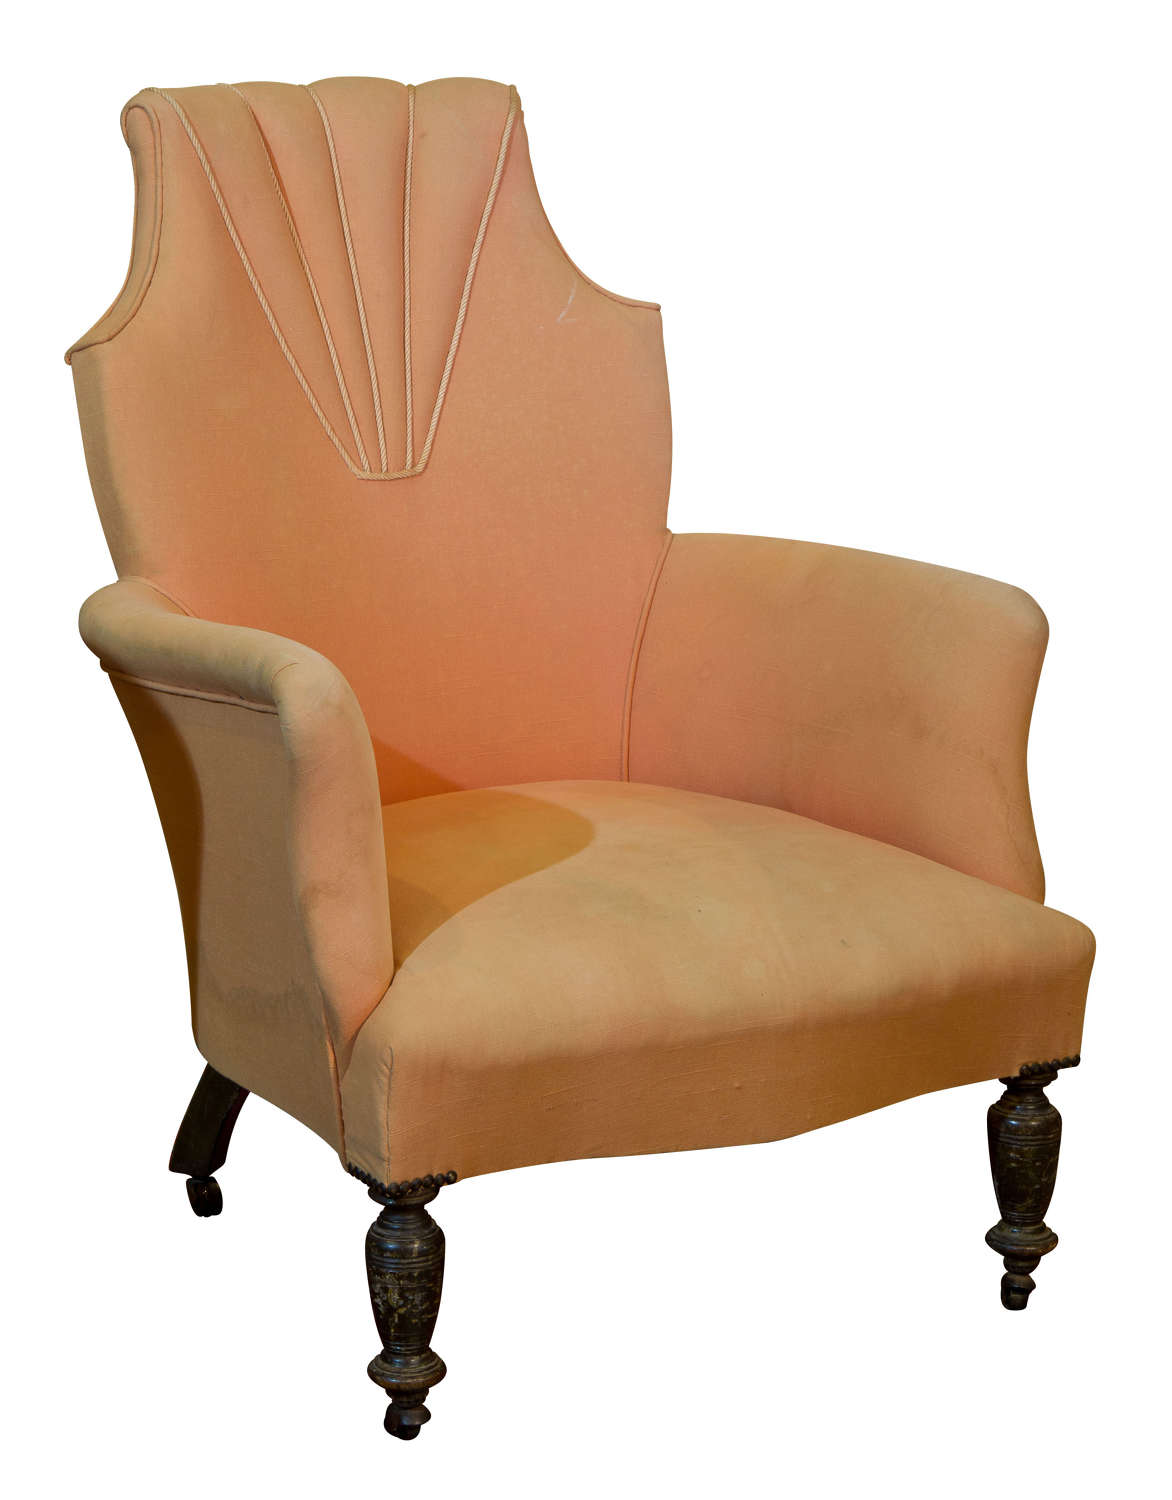 Stylish Art Deco armchair